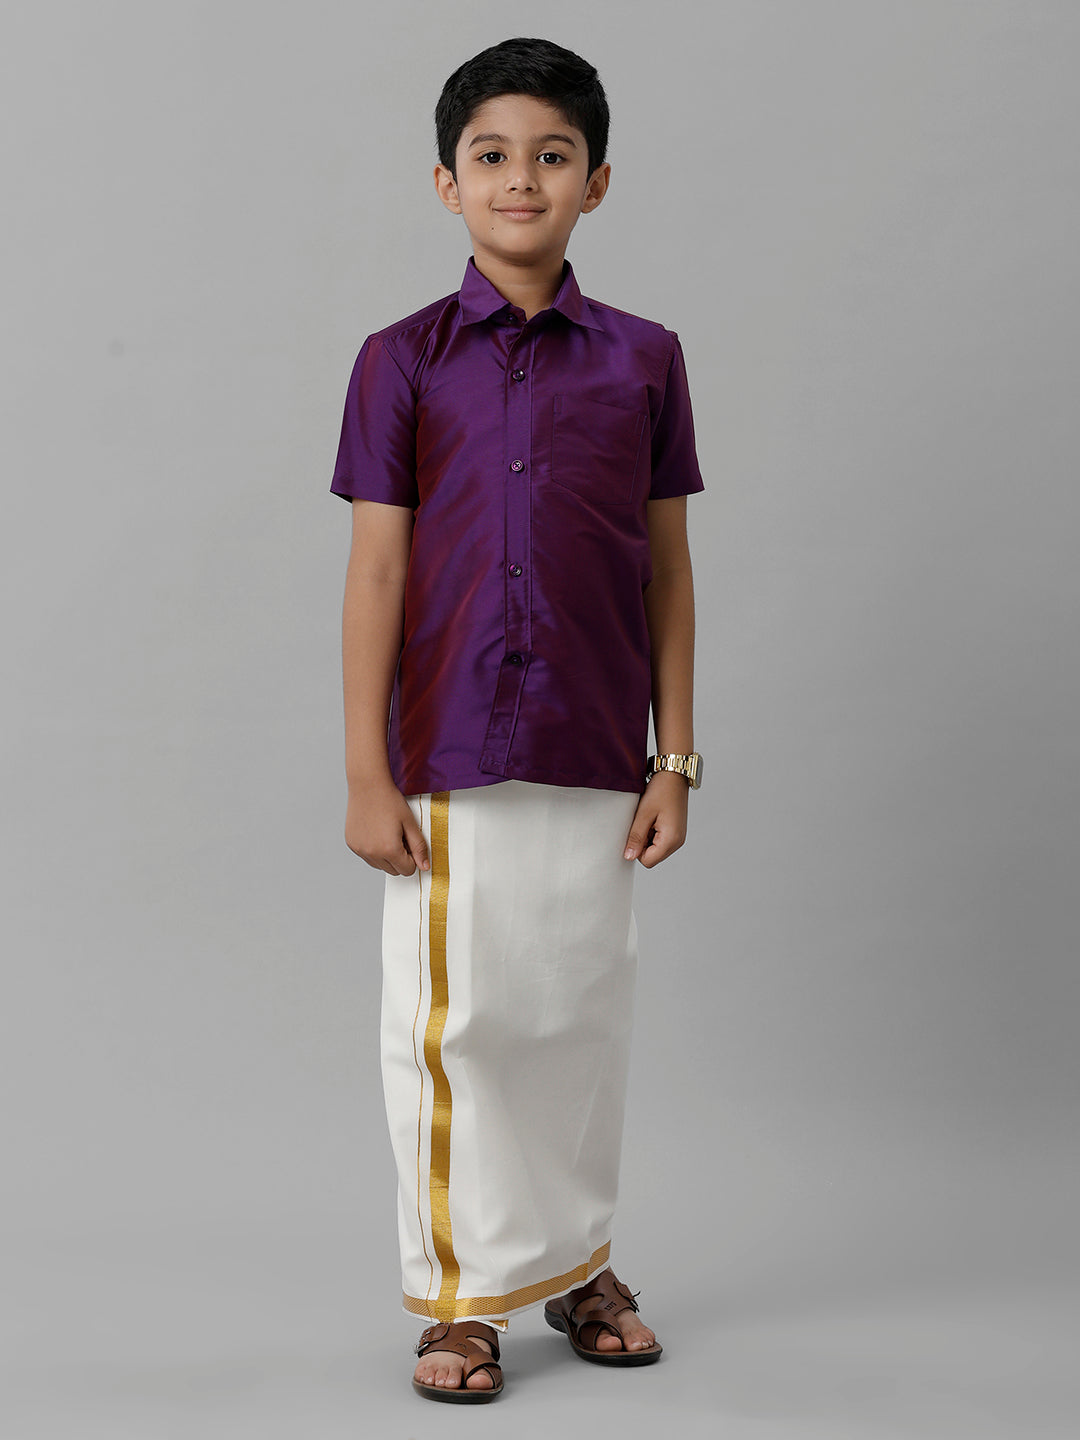 Shop 4 Years Boy Dress online | Lazada.com.my